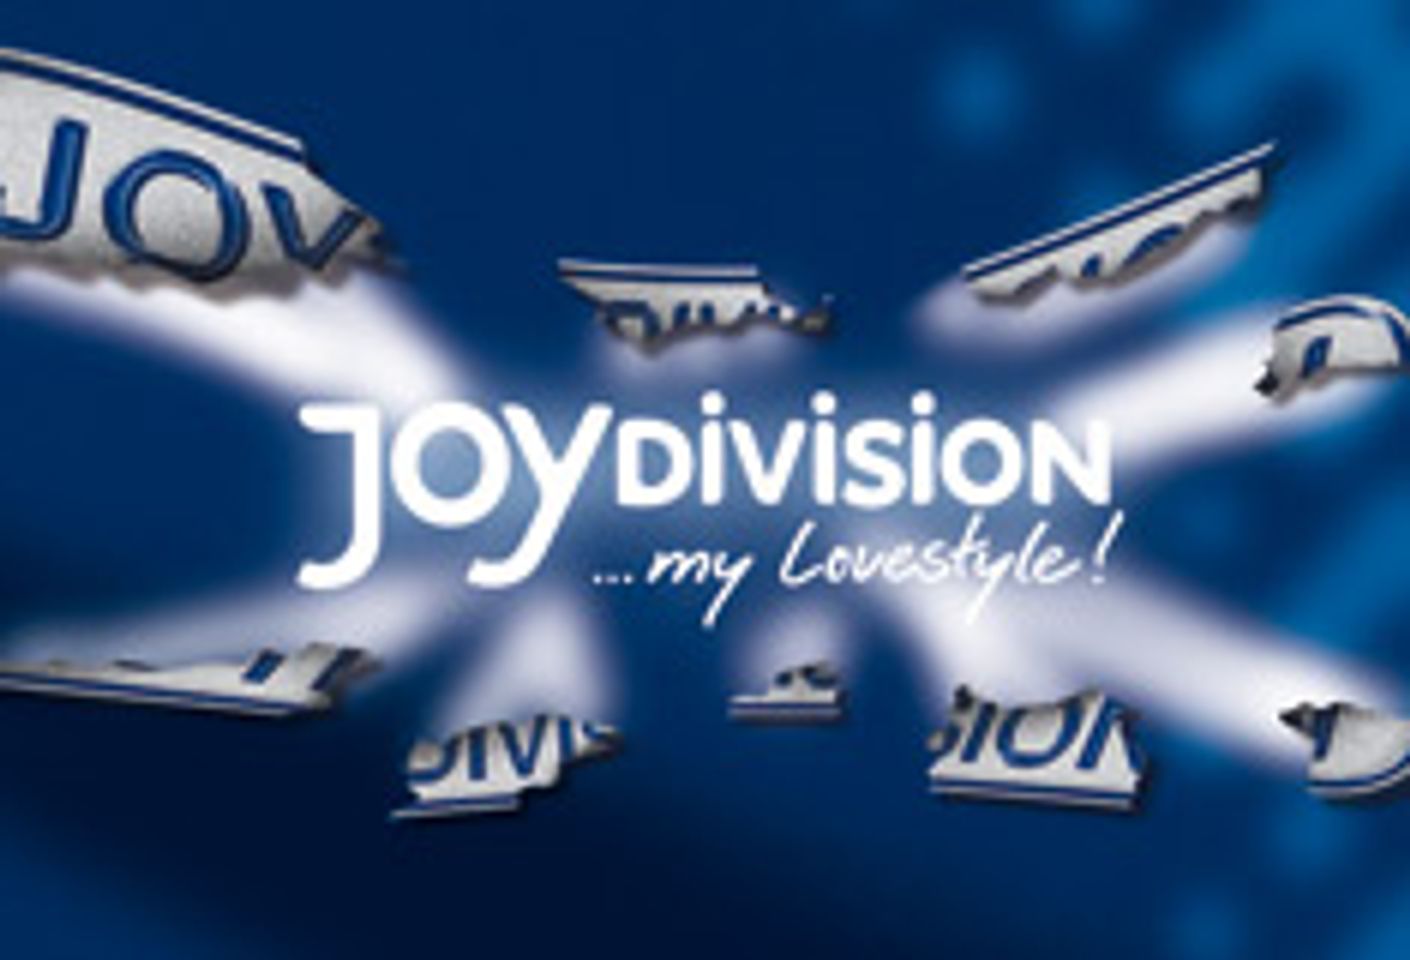 Joydivision's XPander Nominated for 2016 ‘O’ Awards, AVN Fan Voted Awards